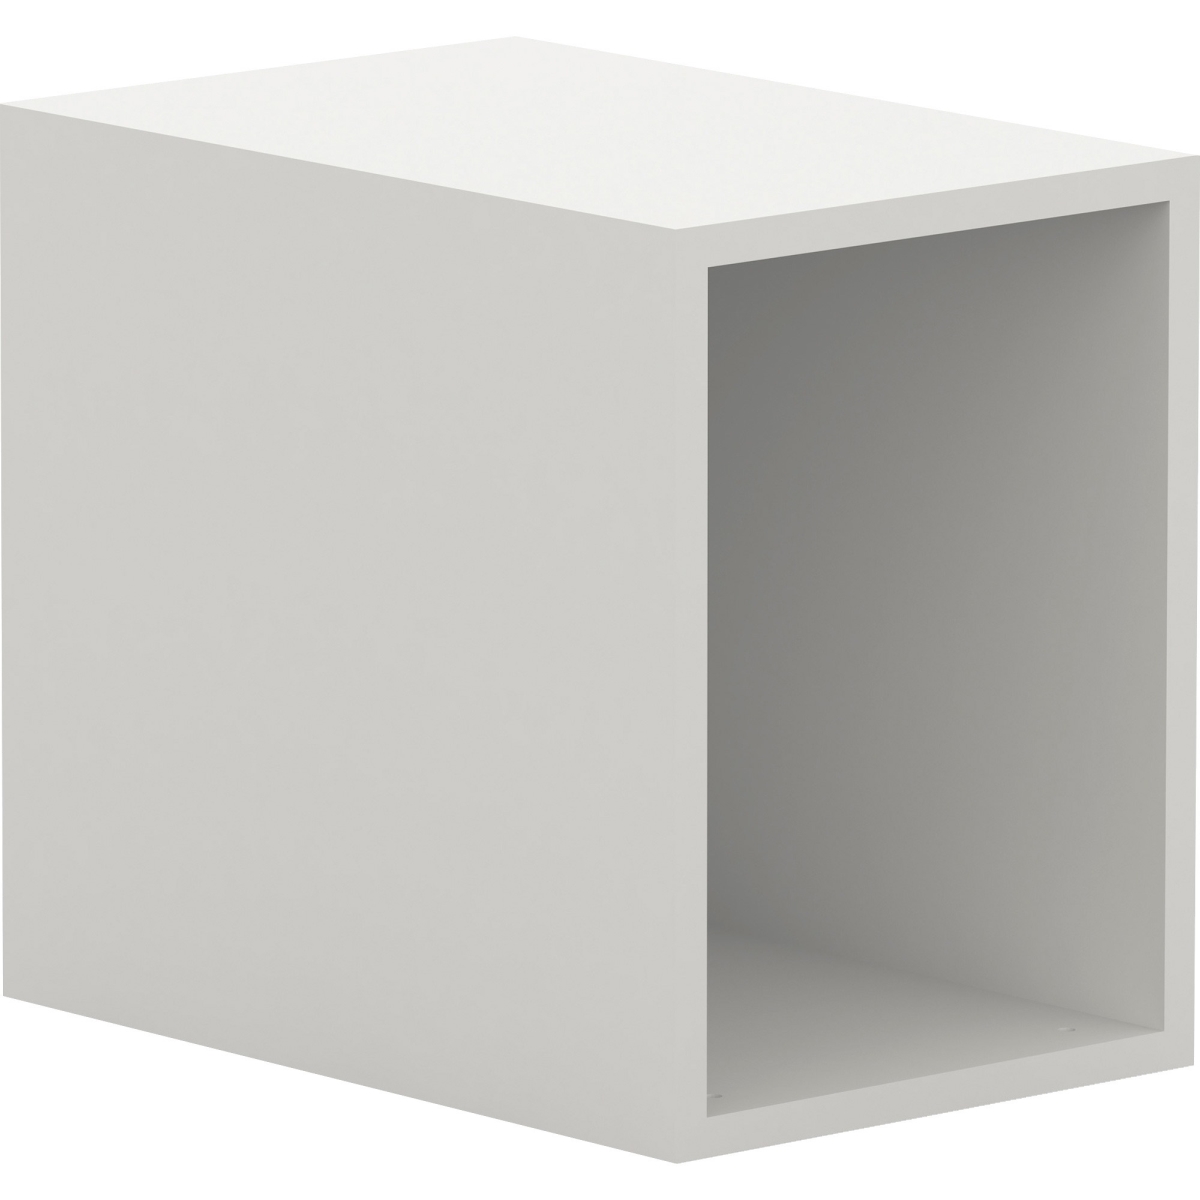 Llr42402 11.8 X 17.8 X 15.8 In. Single Cubby Storage Base Adder Unit, White